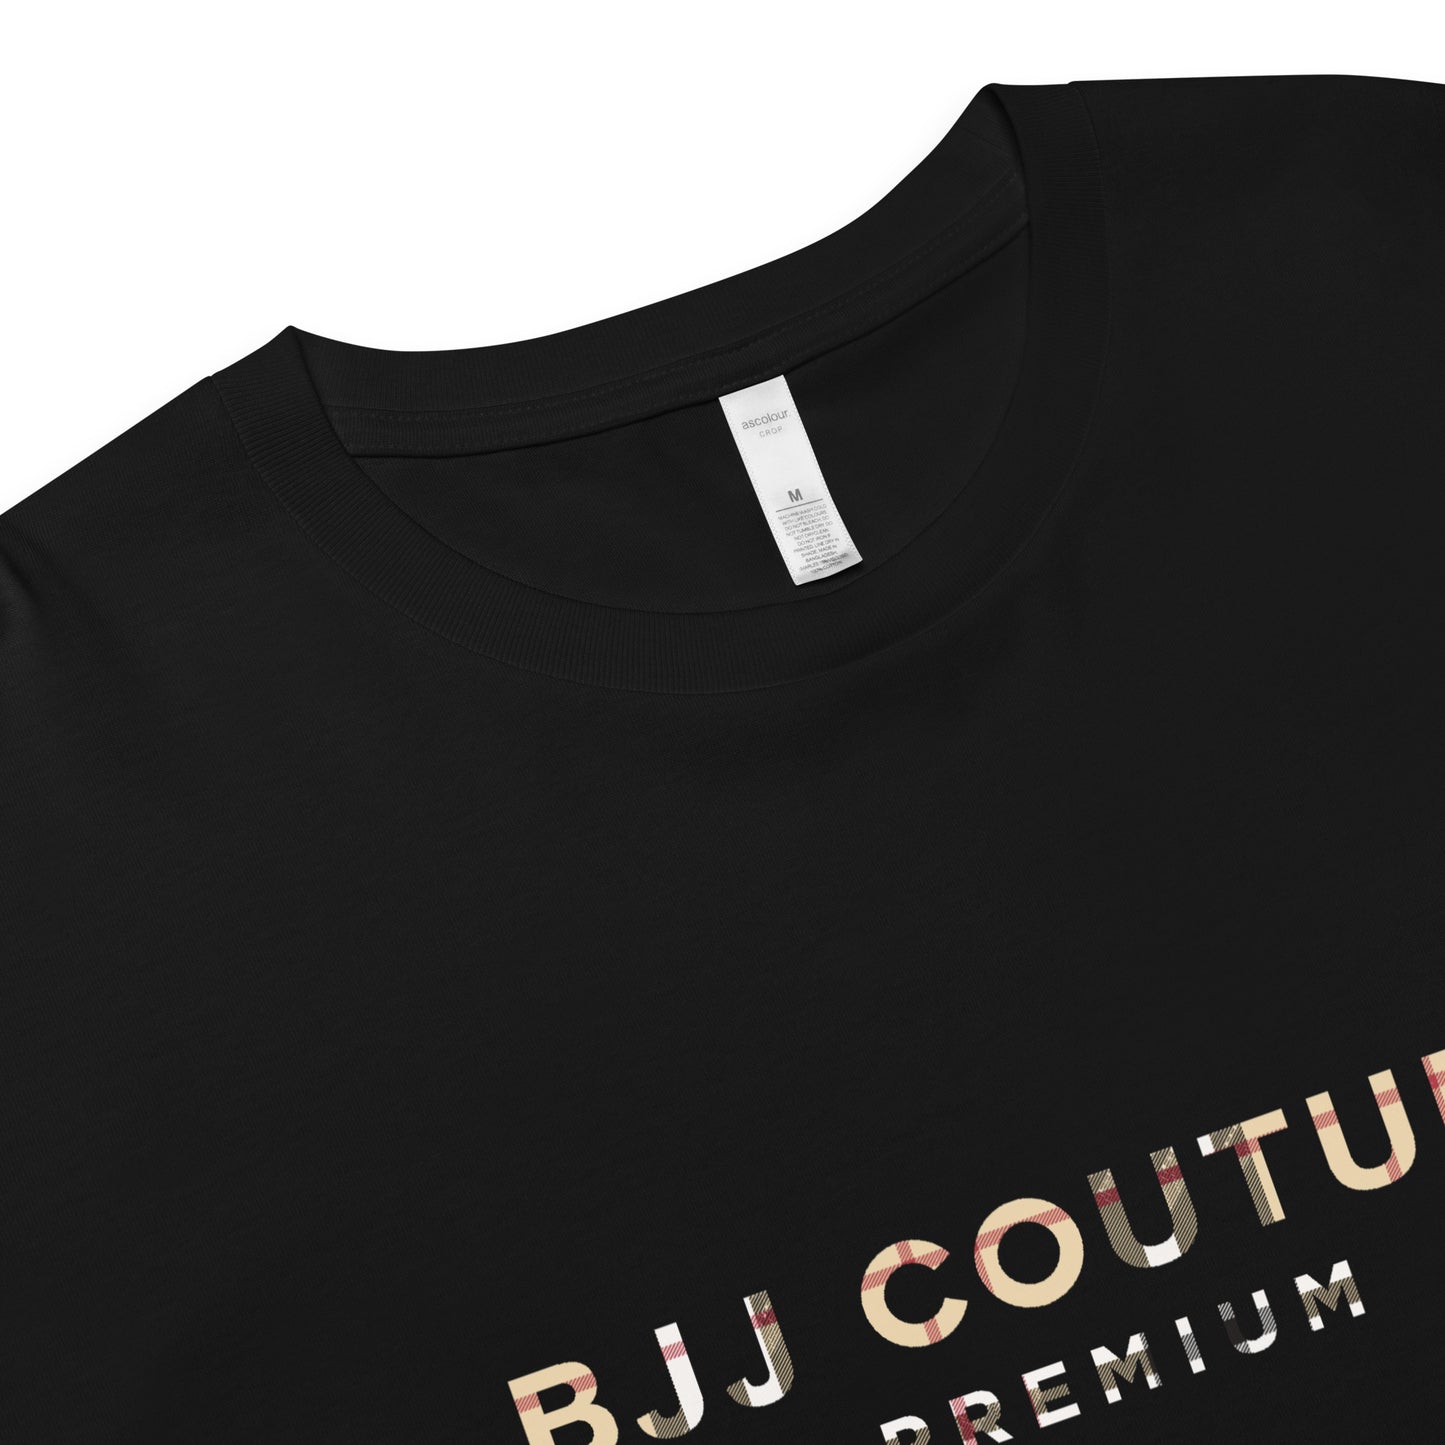 BJJ Couture Premium Tartan Black & Tan Women’s crop top